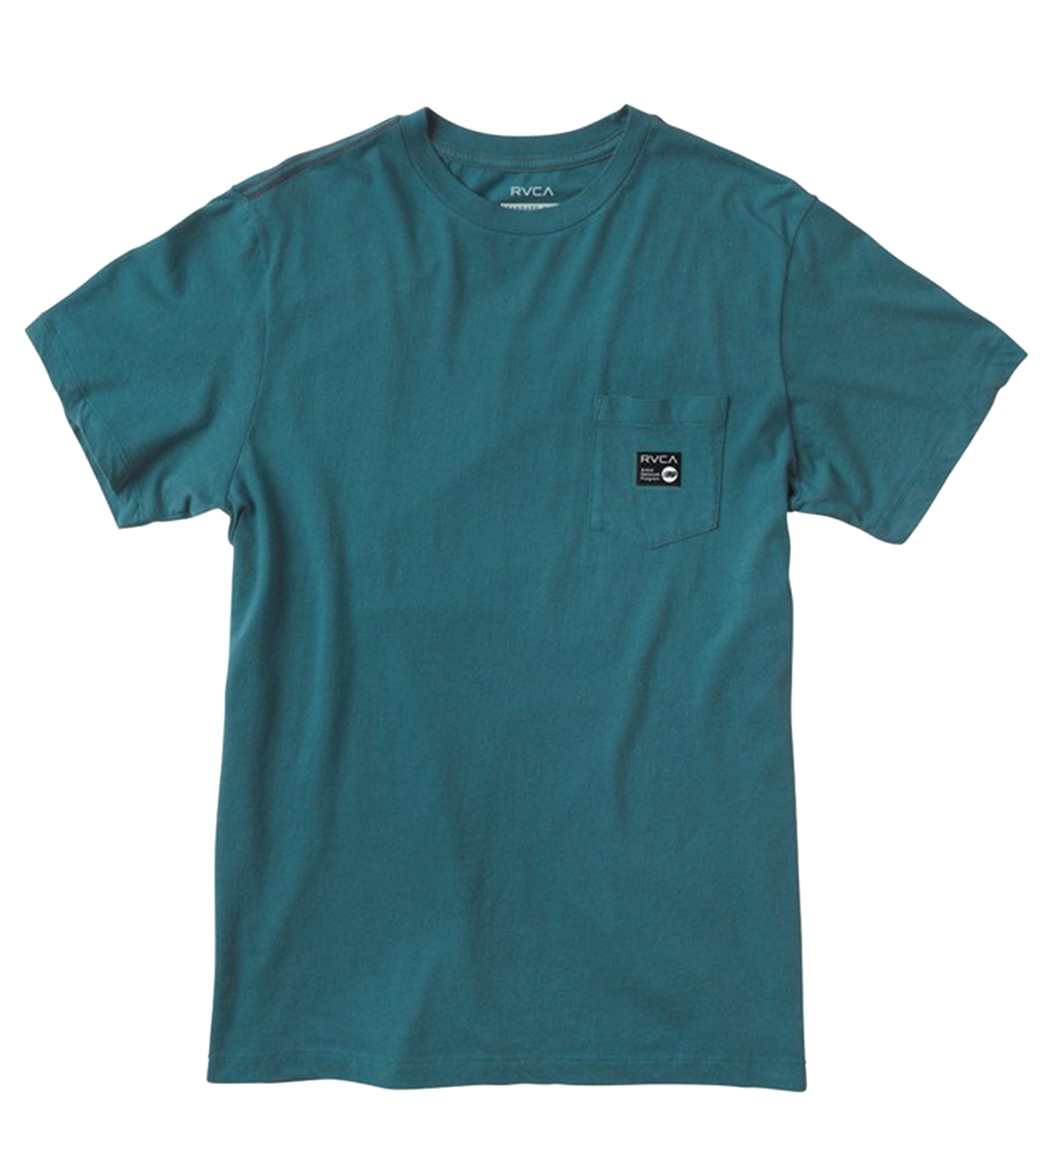 Rvca Men's Short Sleeve Pocket Tee Shirt - Peacock Blue Large - Swimoutlet.com